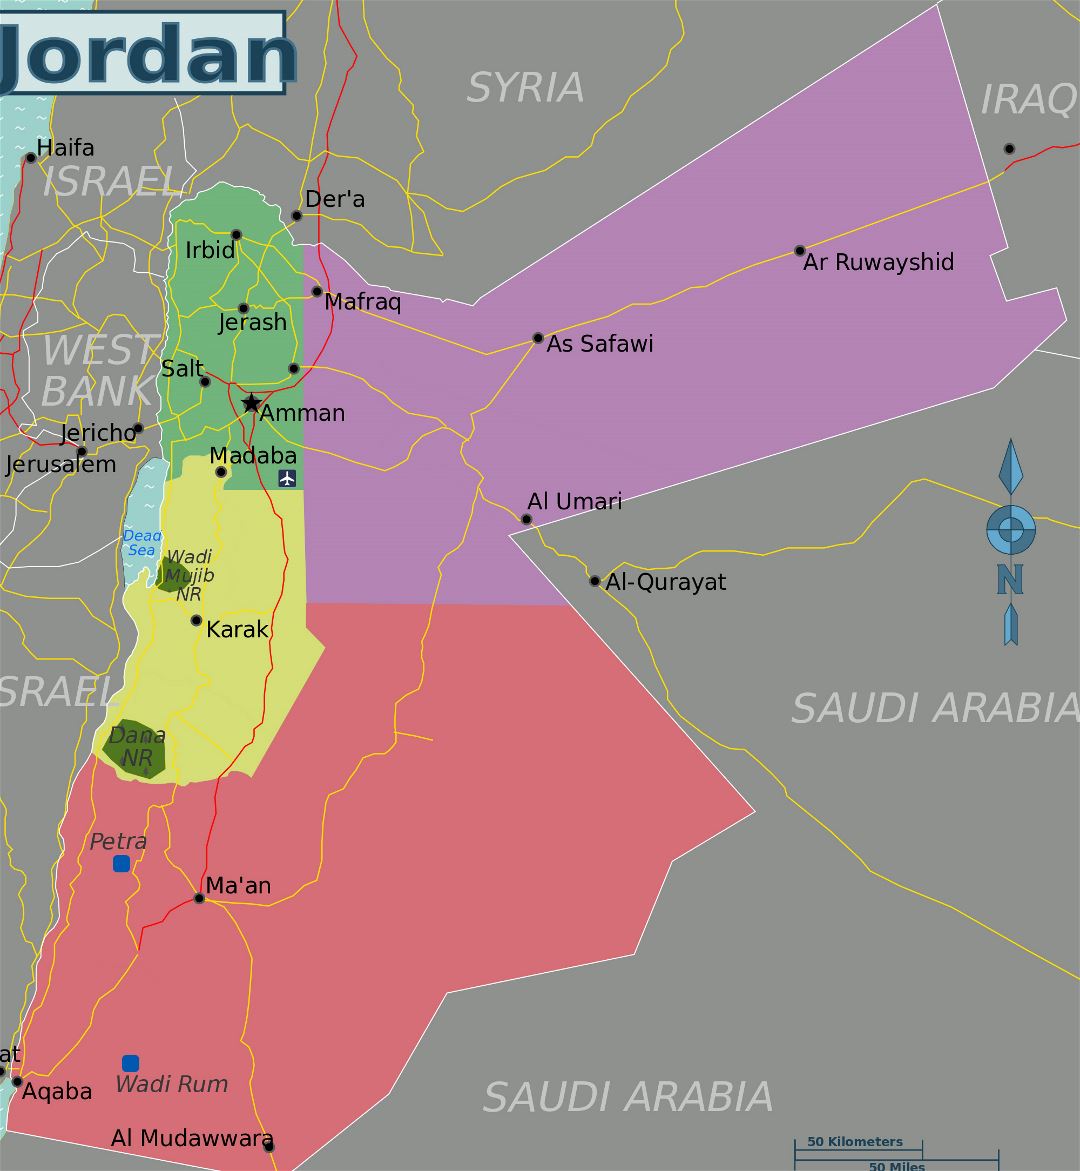 Large regions map of Jordan